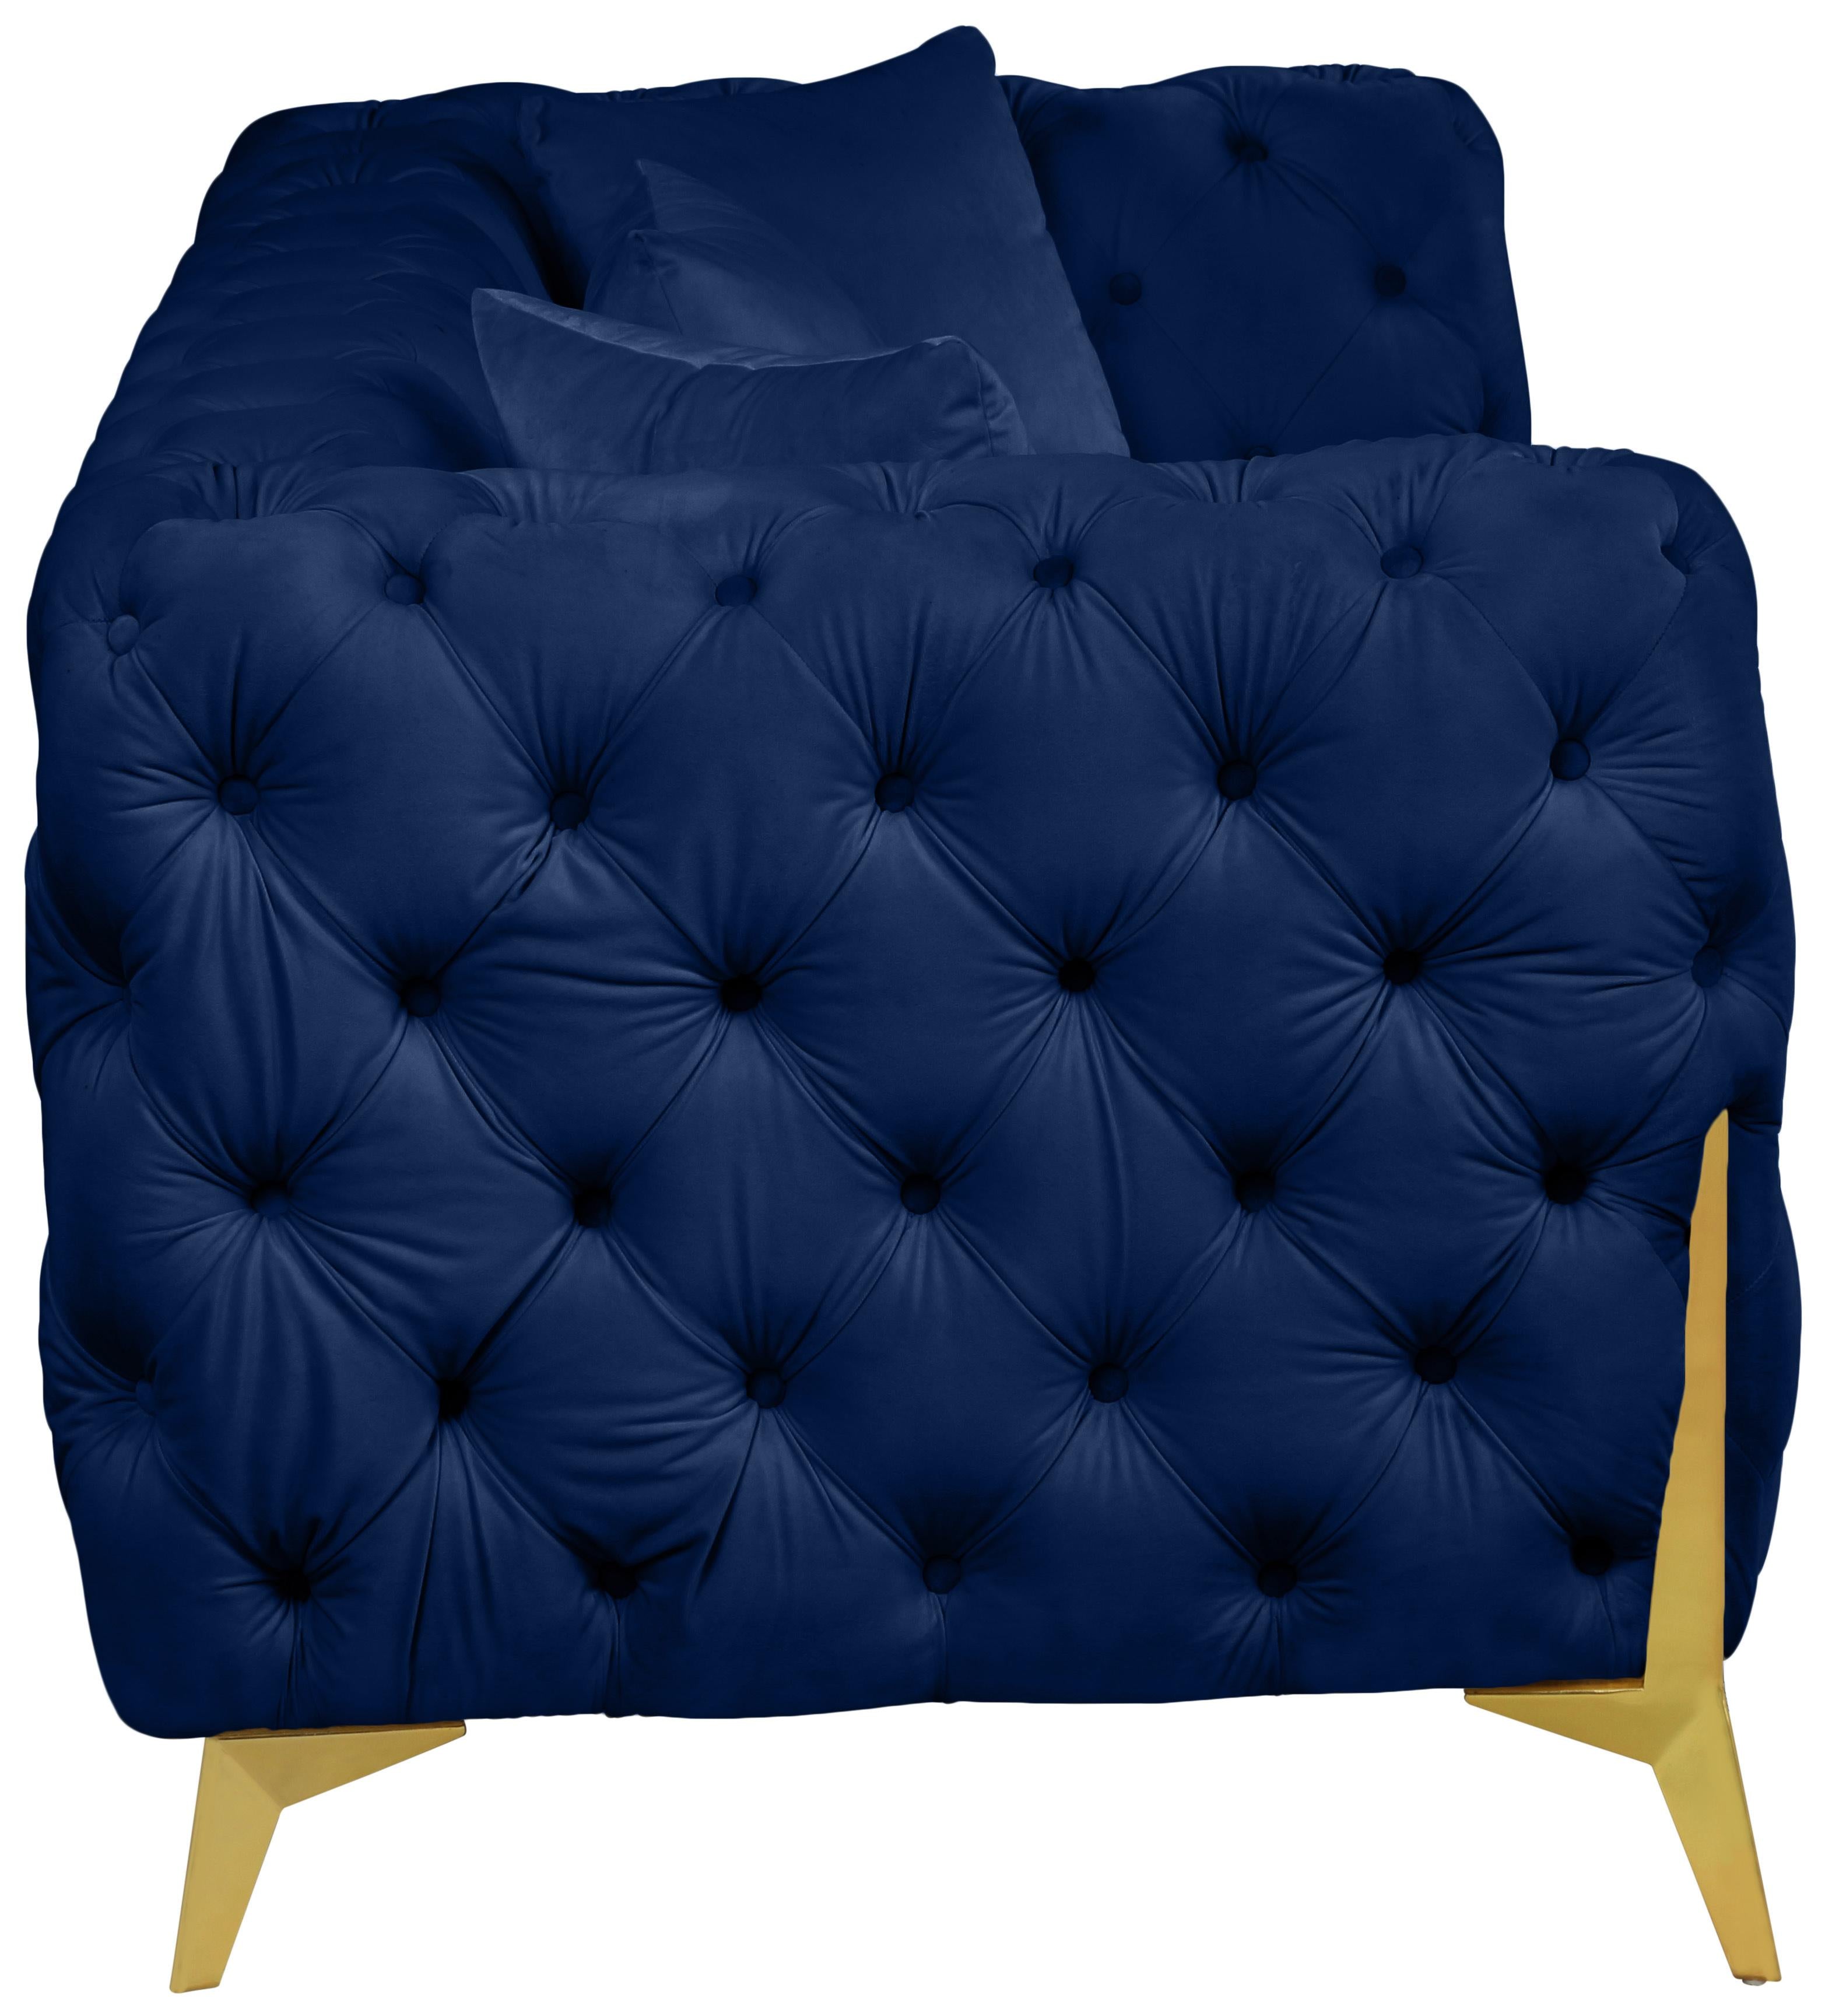 Kingdom Navy Velvet Sofa - Luxury Home Furniture (MI)